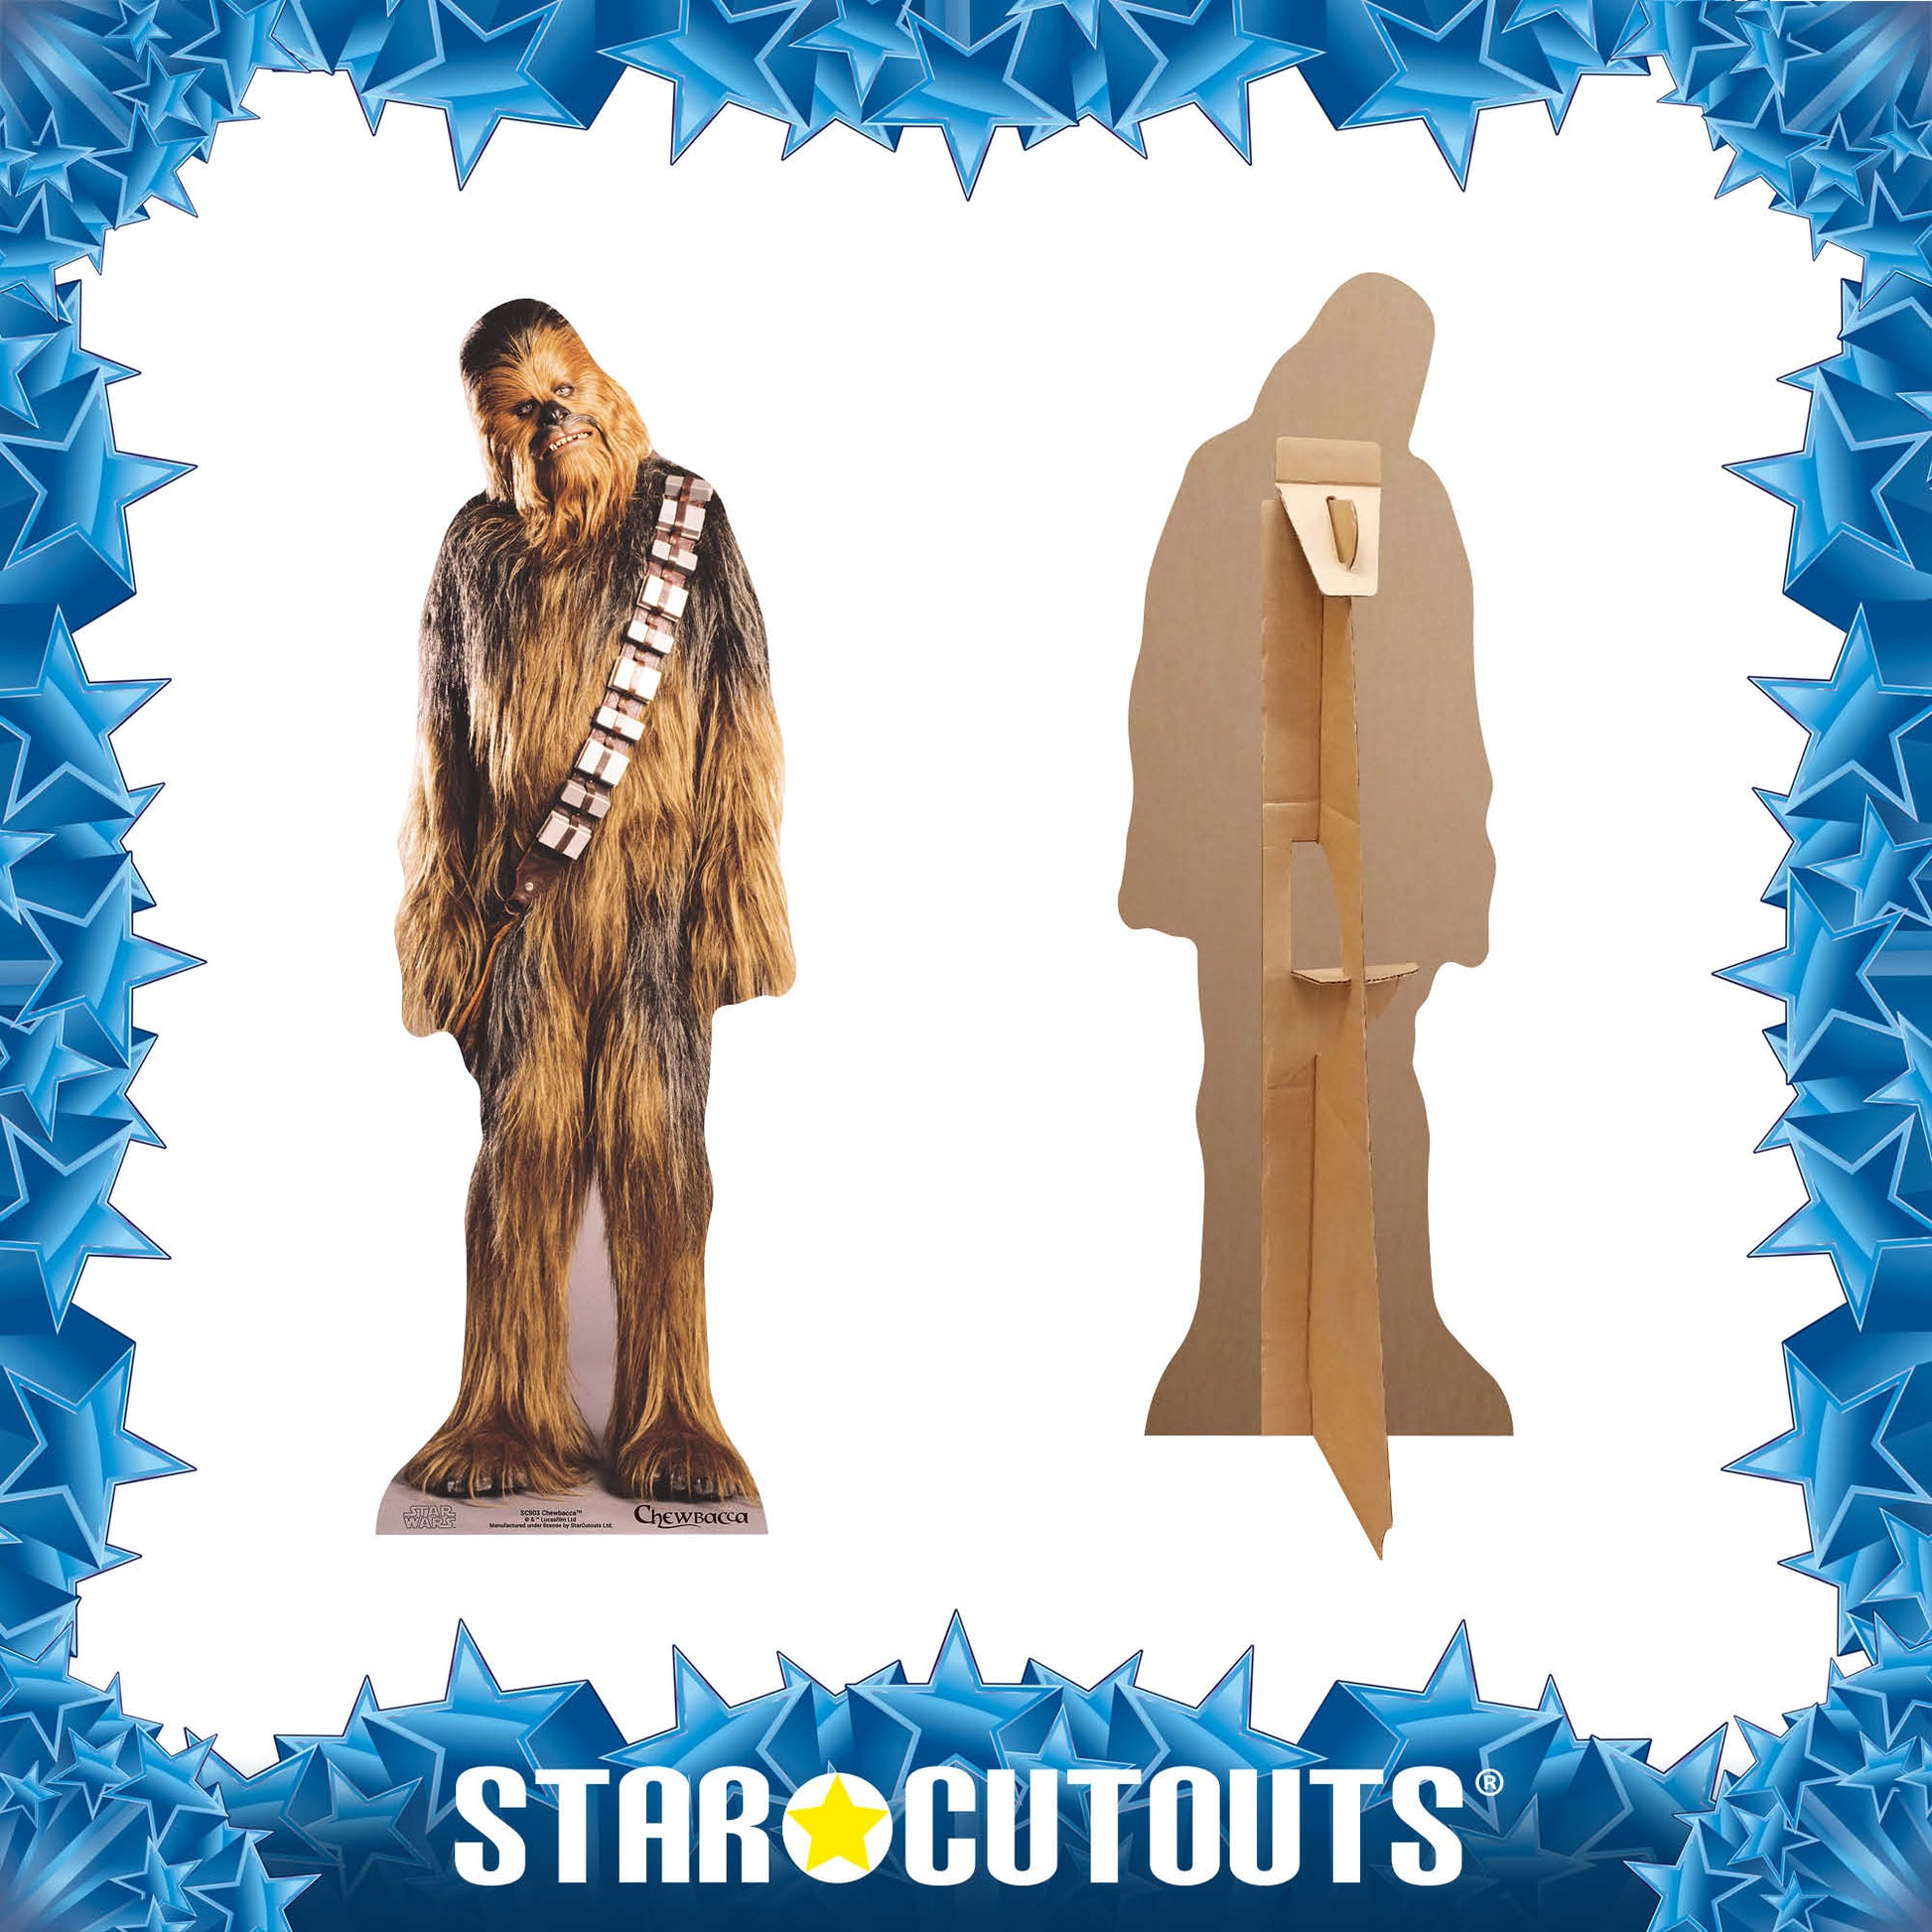 Chewbacca Small Cardboard Cutout